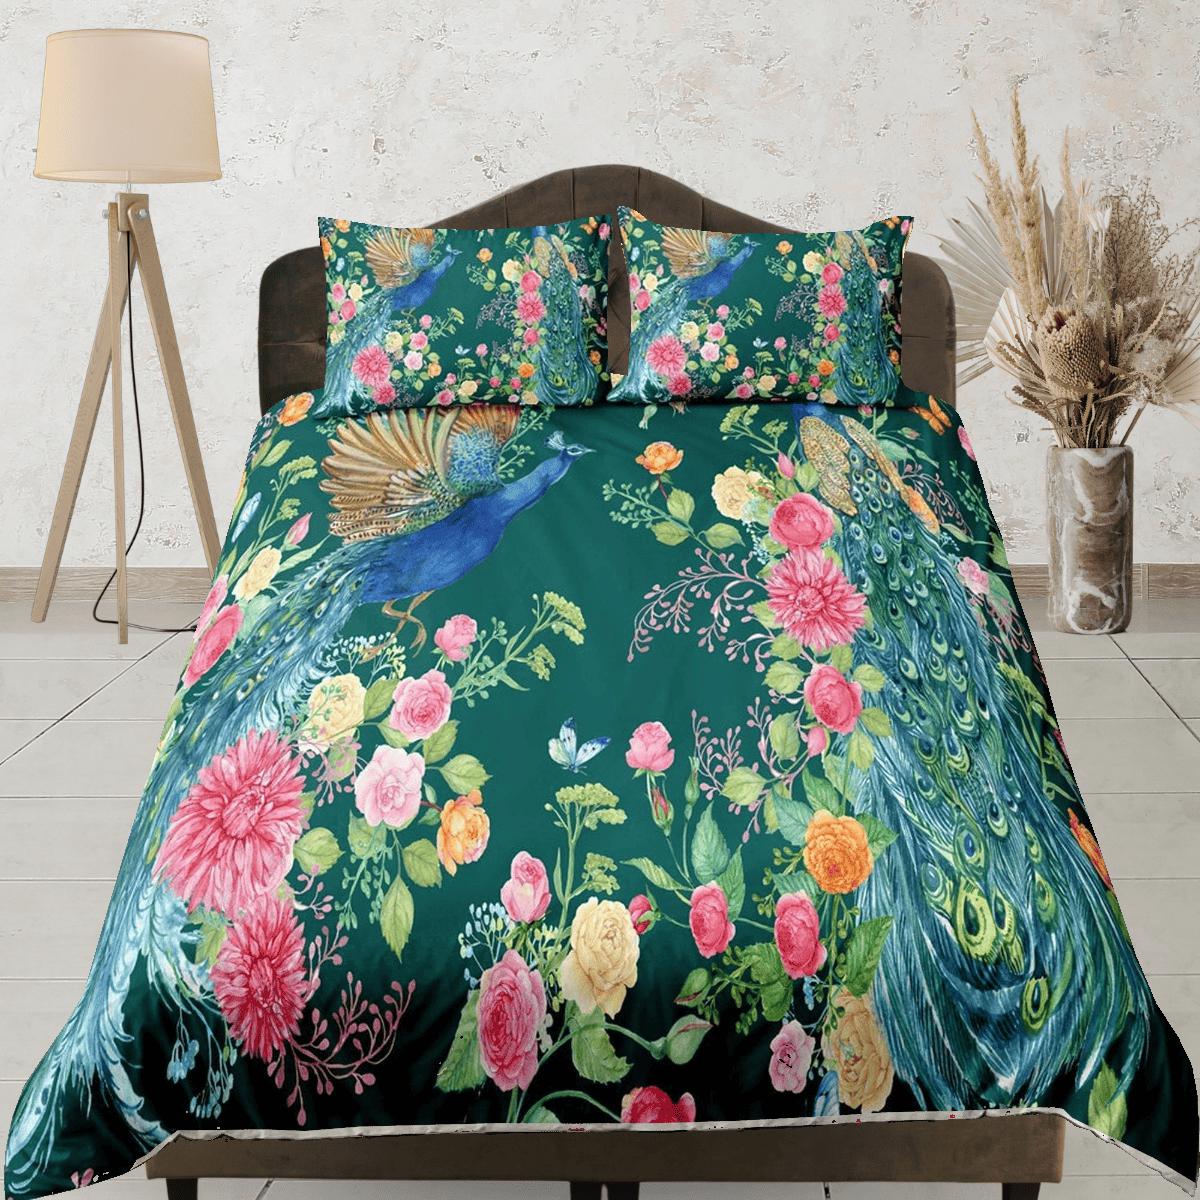 daintyduvet Peacock biophilic bedding, floral printed duvet cover queen, king, boho duvet, designer bedding, aesthetic bedding, maximalist decor